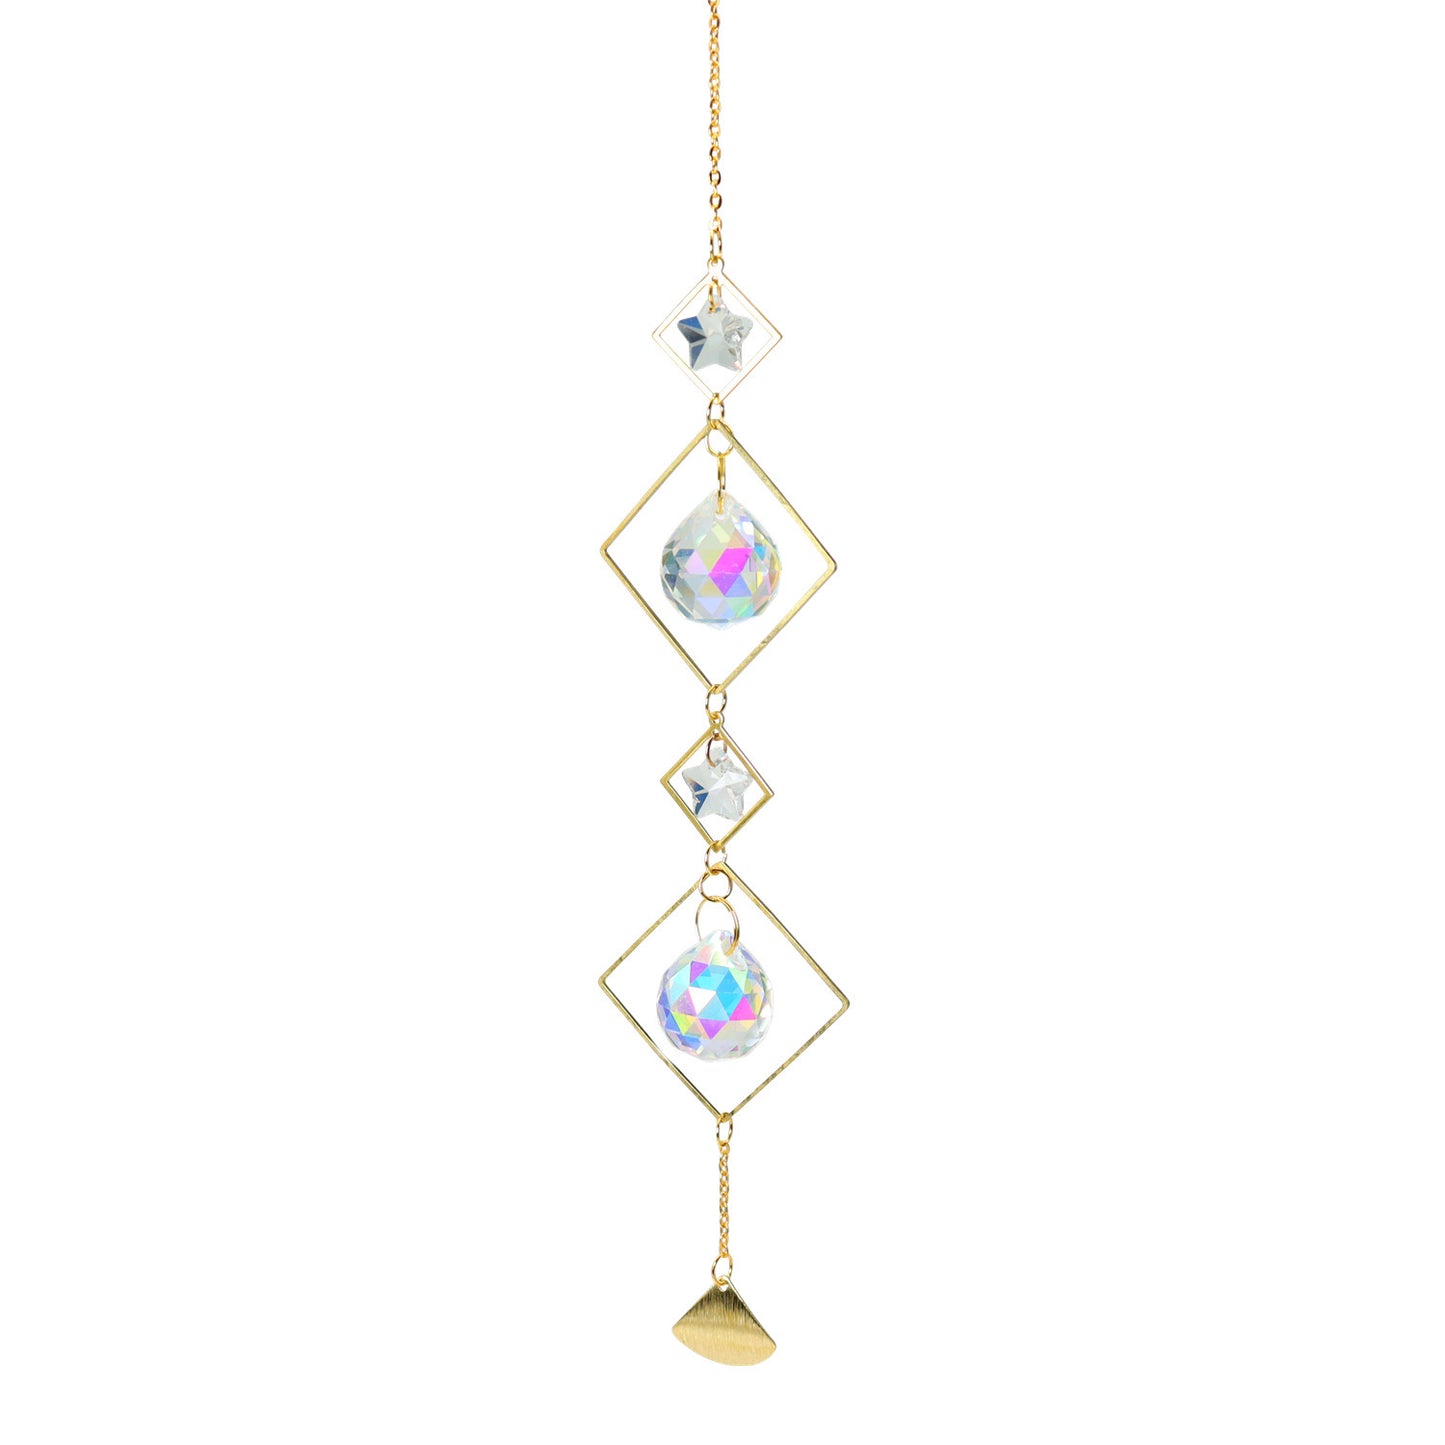 K9 Aura Crystal Hanger Suncatcher 2 Moons 2 Stars Brass Color  - 16 inch - China - NEW922